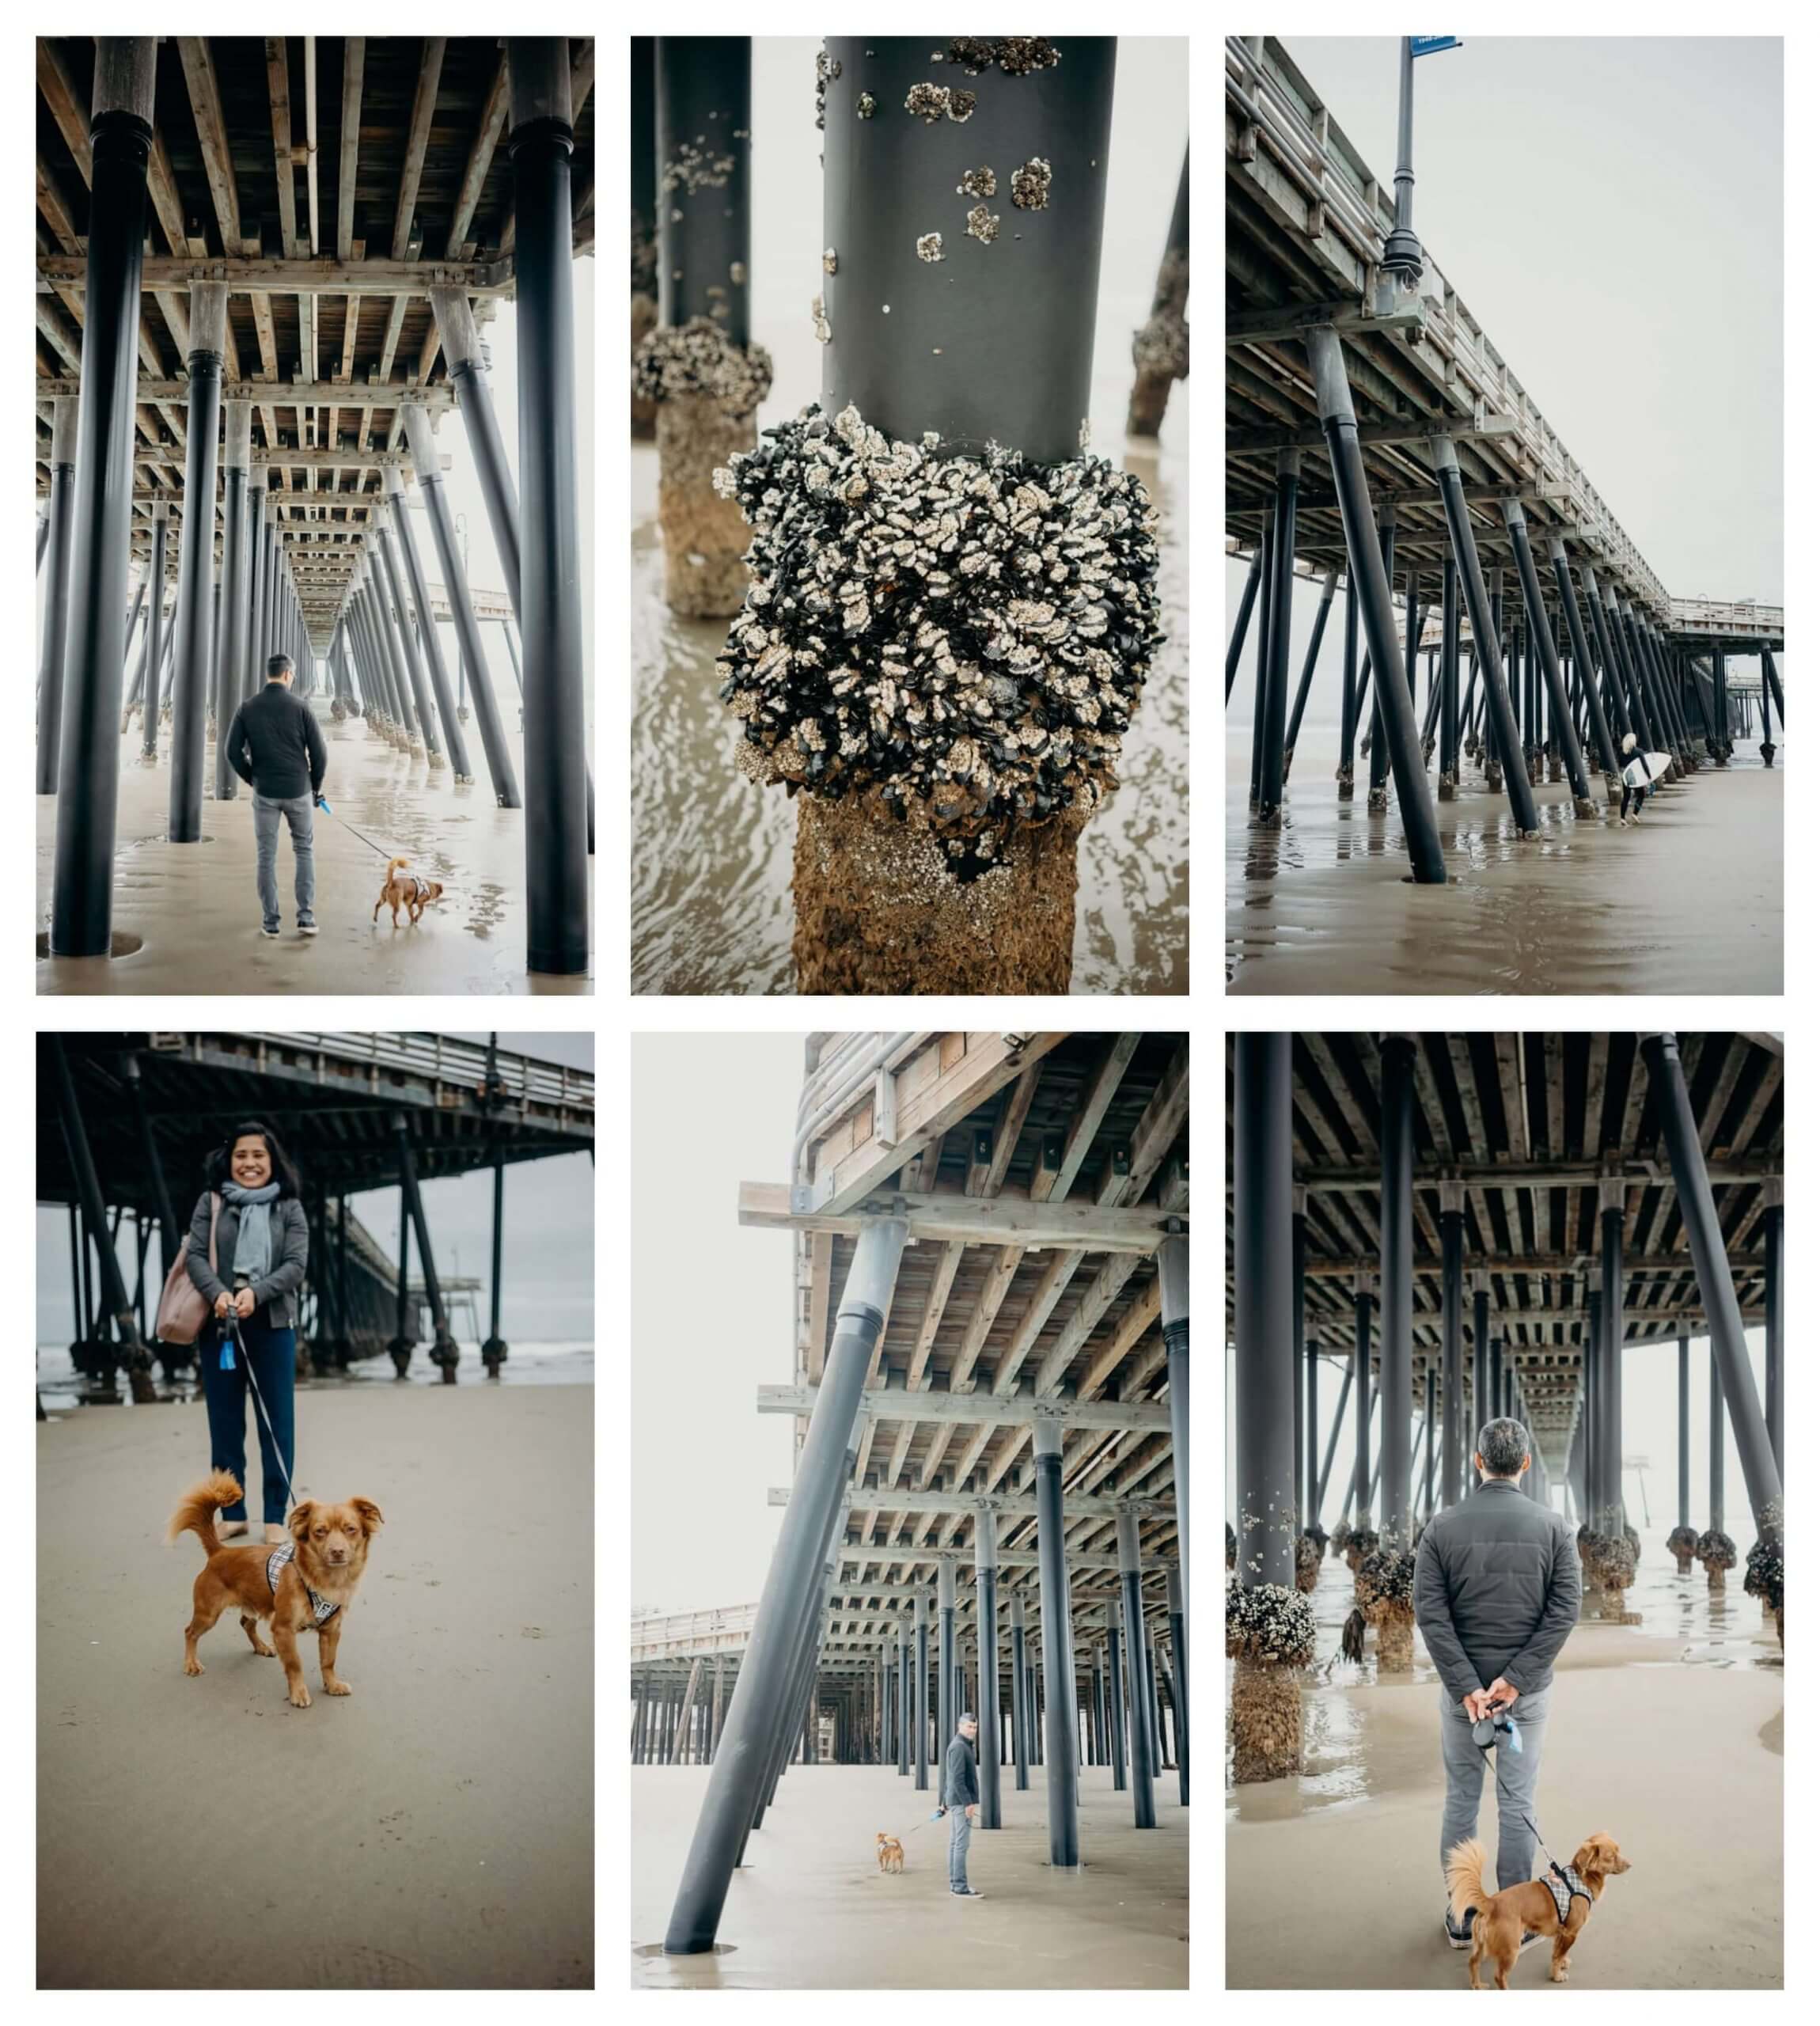 Pismo beach is a dog friendly beach on California's Central Coast